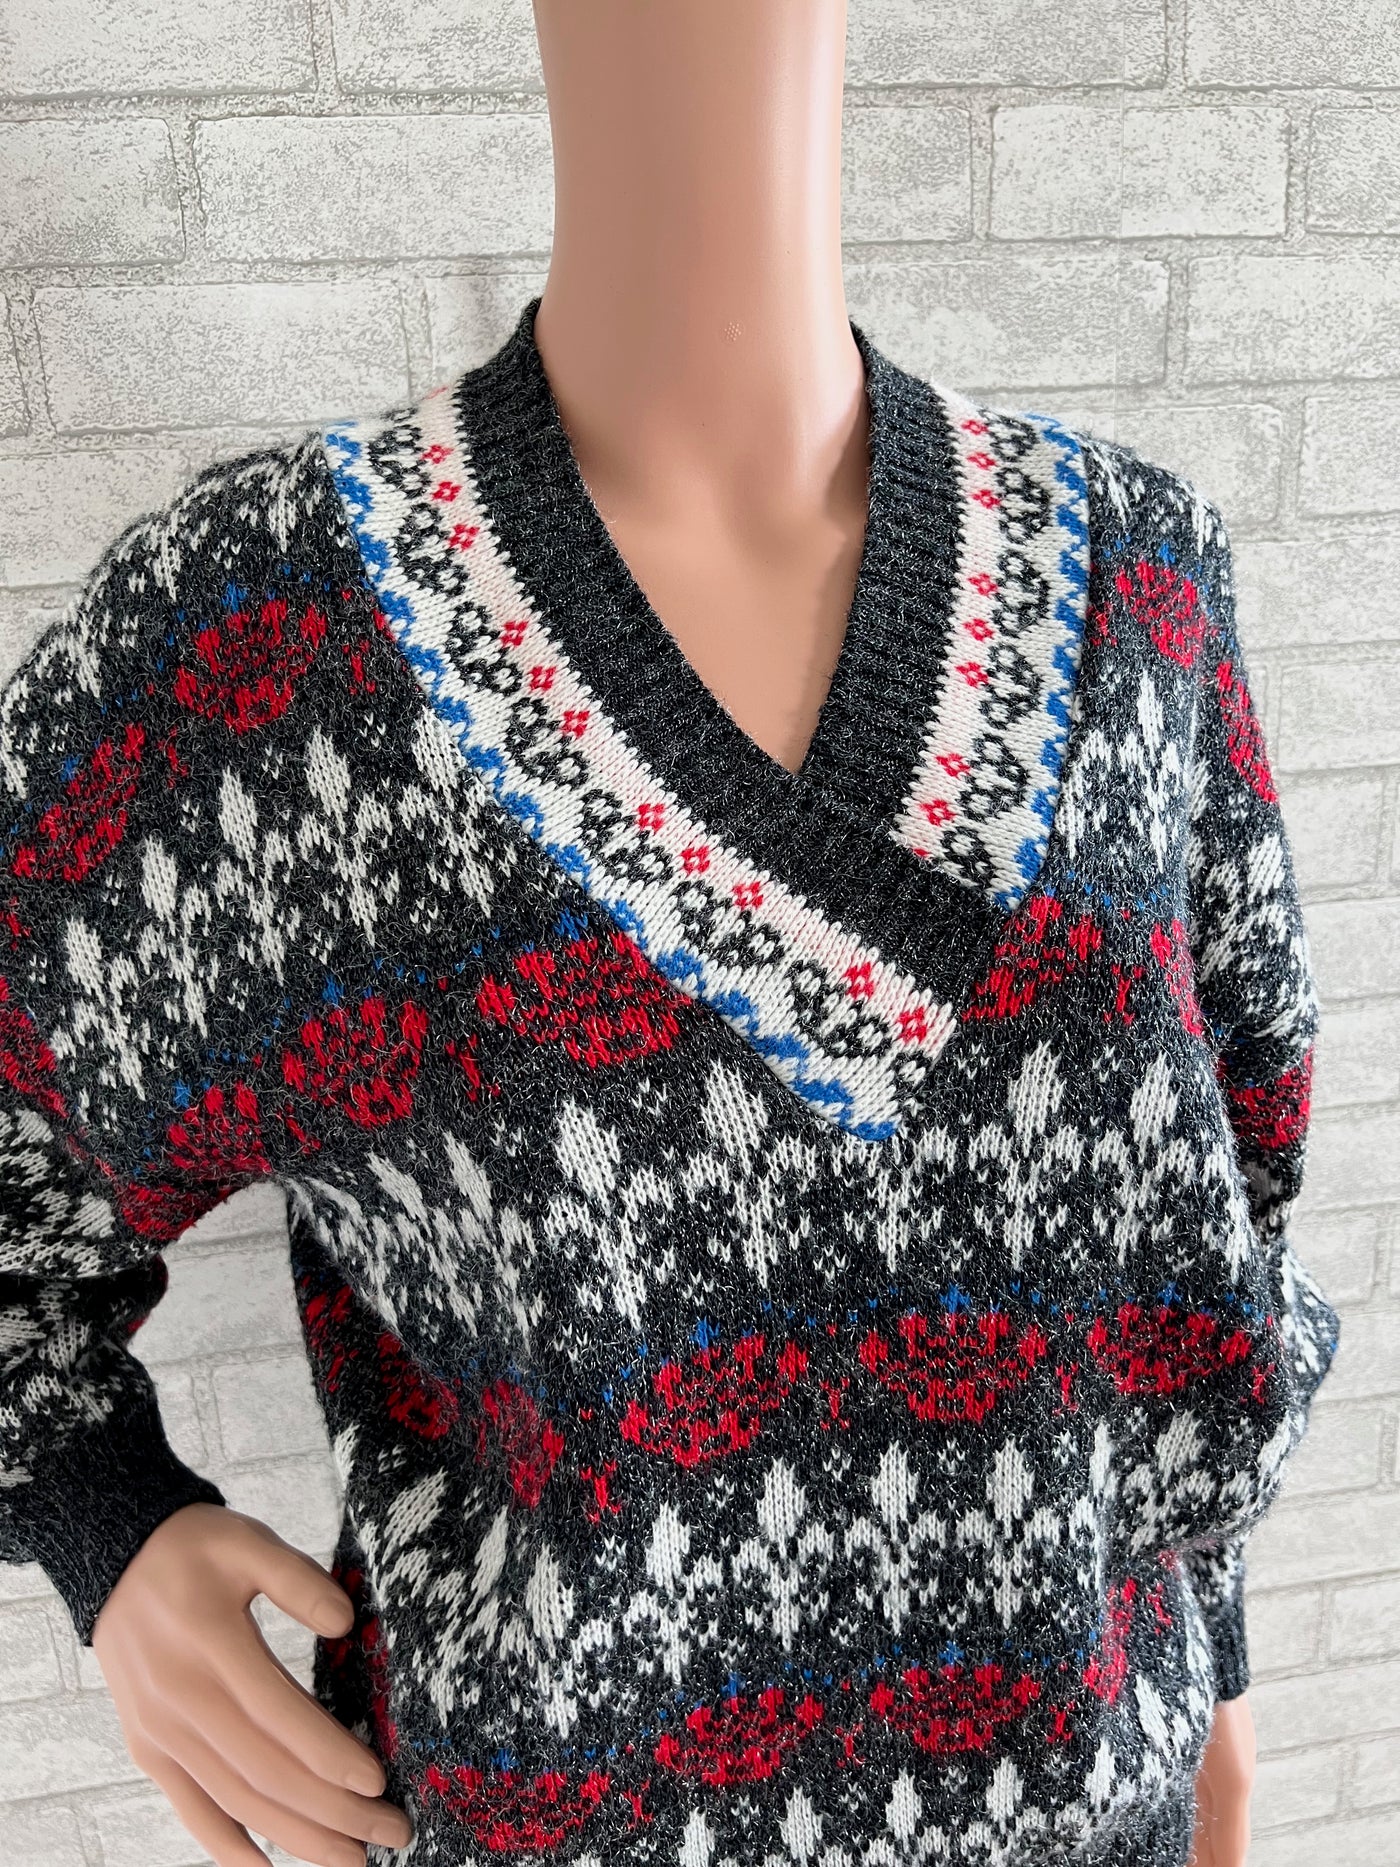 Vintage Women's Jolie Sweater